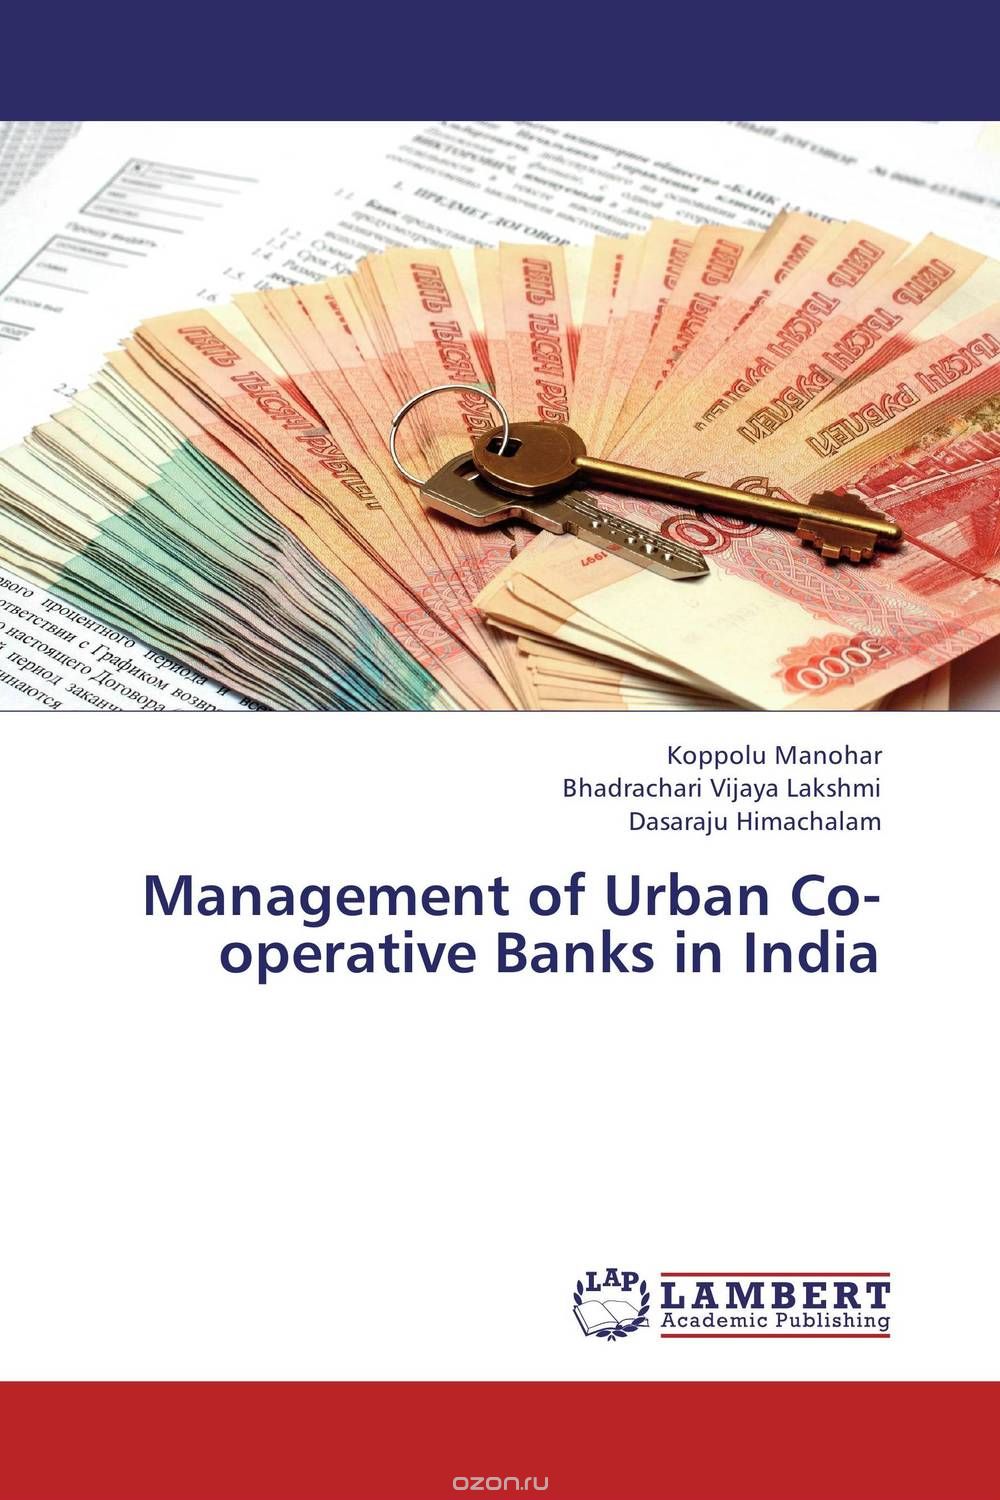 Скачать книгу "Management of Urban Co-operative Banks in India"